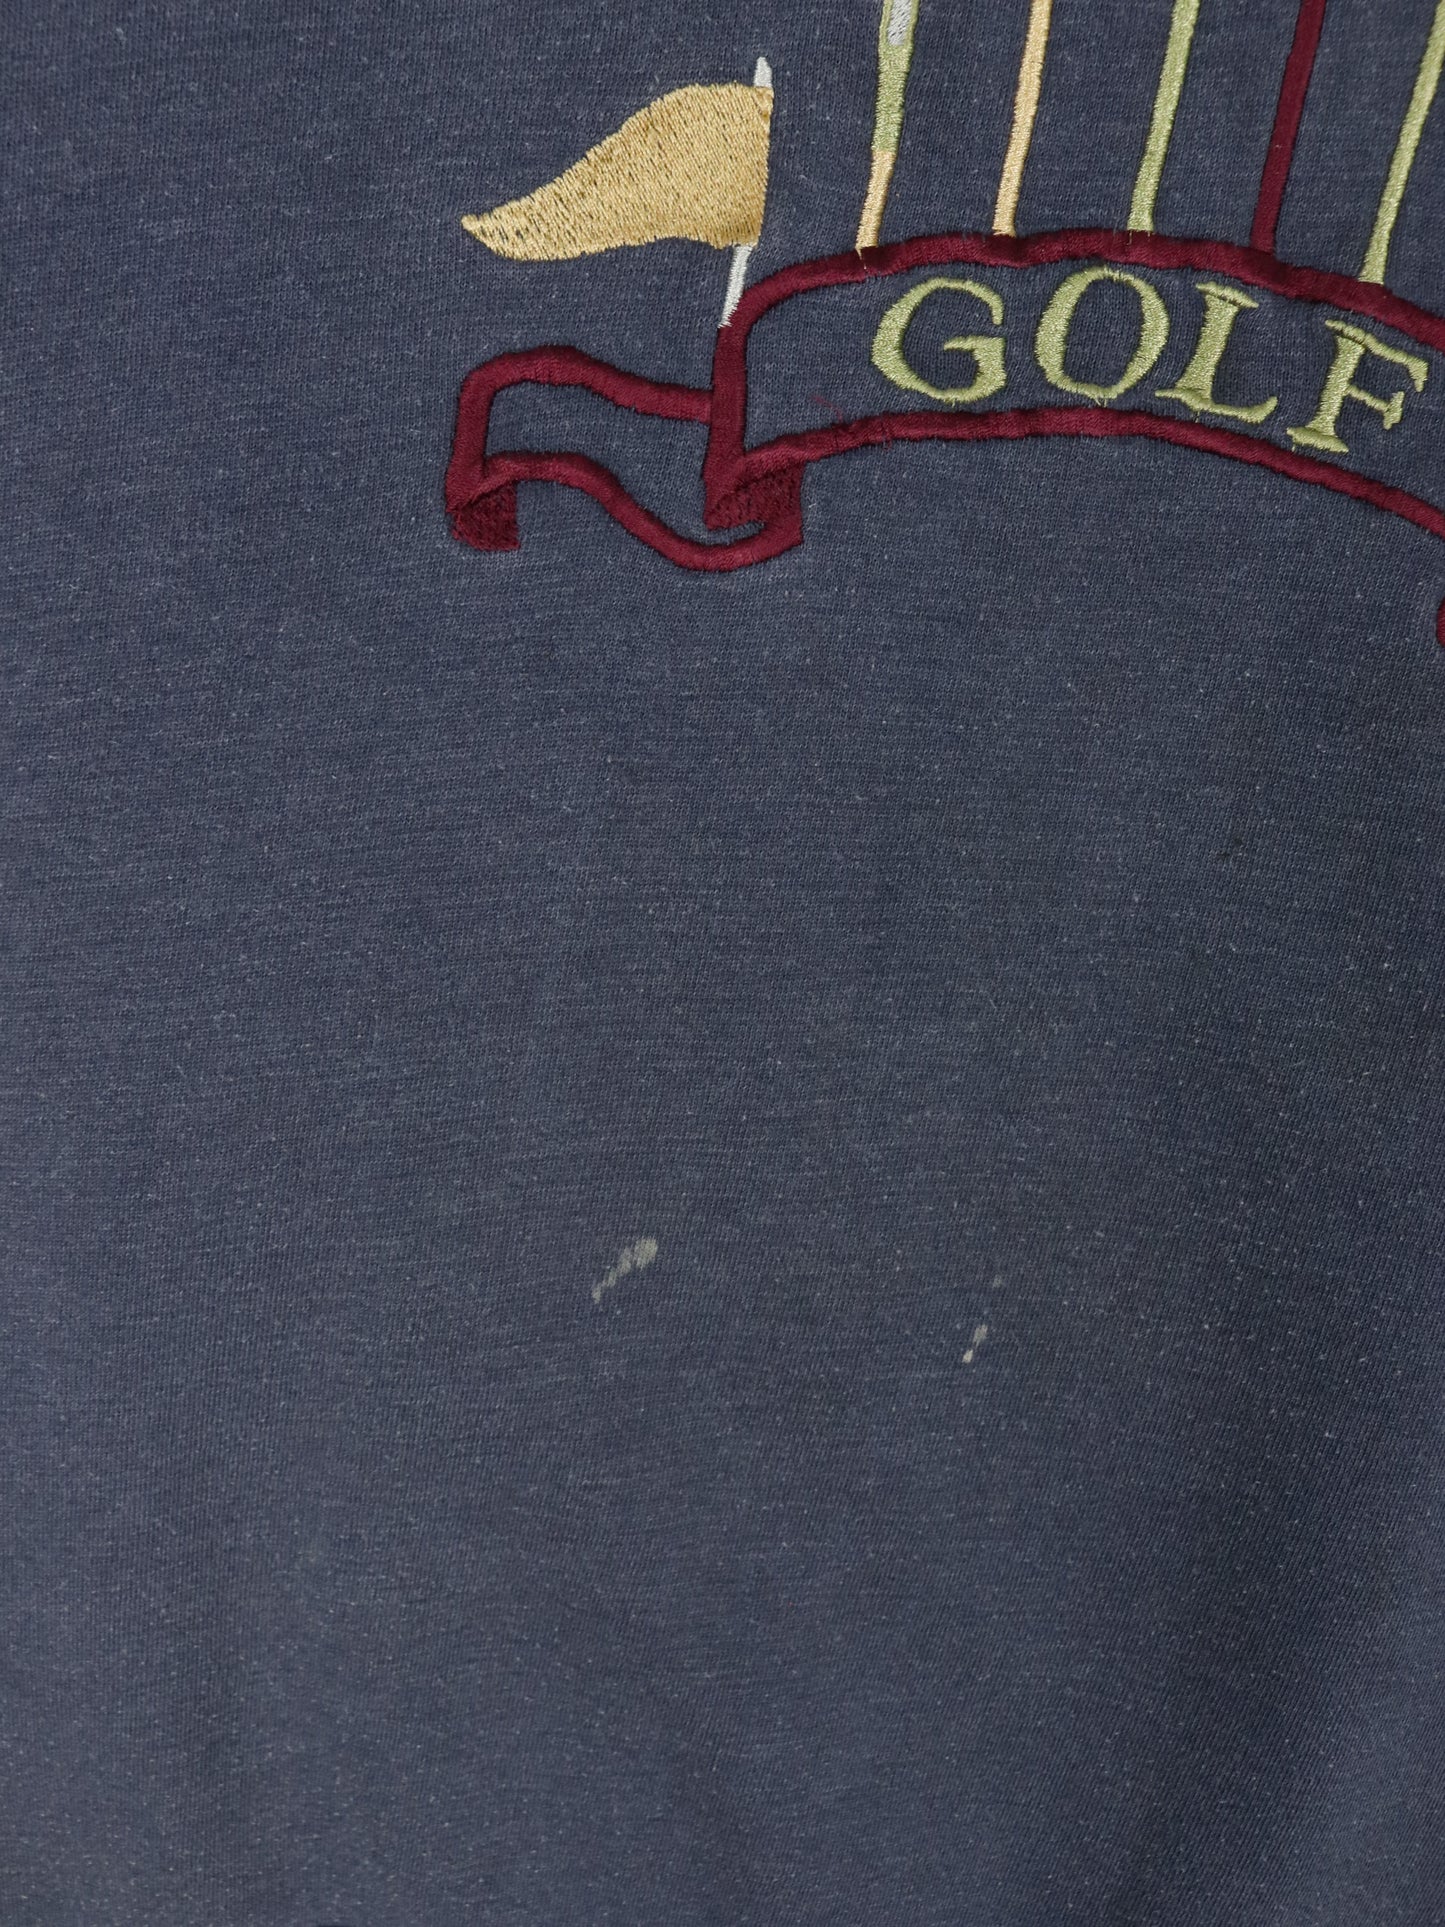 Vintage Golf Sweatshirt Mens XL Blue Danaggers